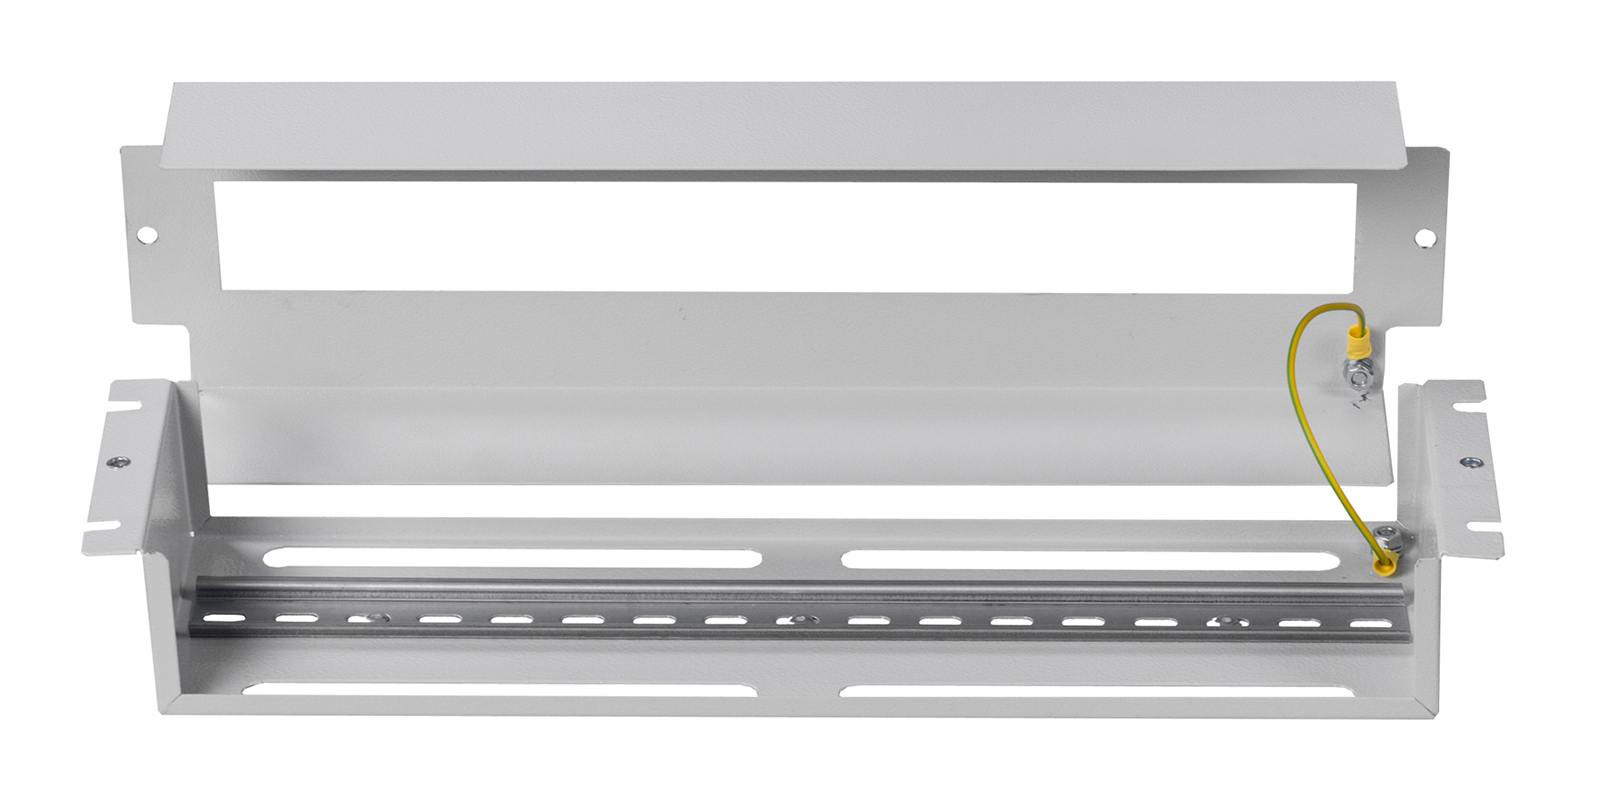 Opton voltage distribution panel / DIN rail for rack 19" cabinets 3U